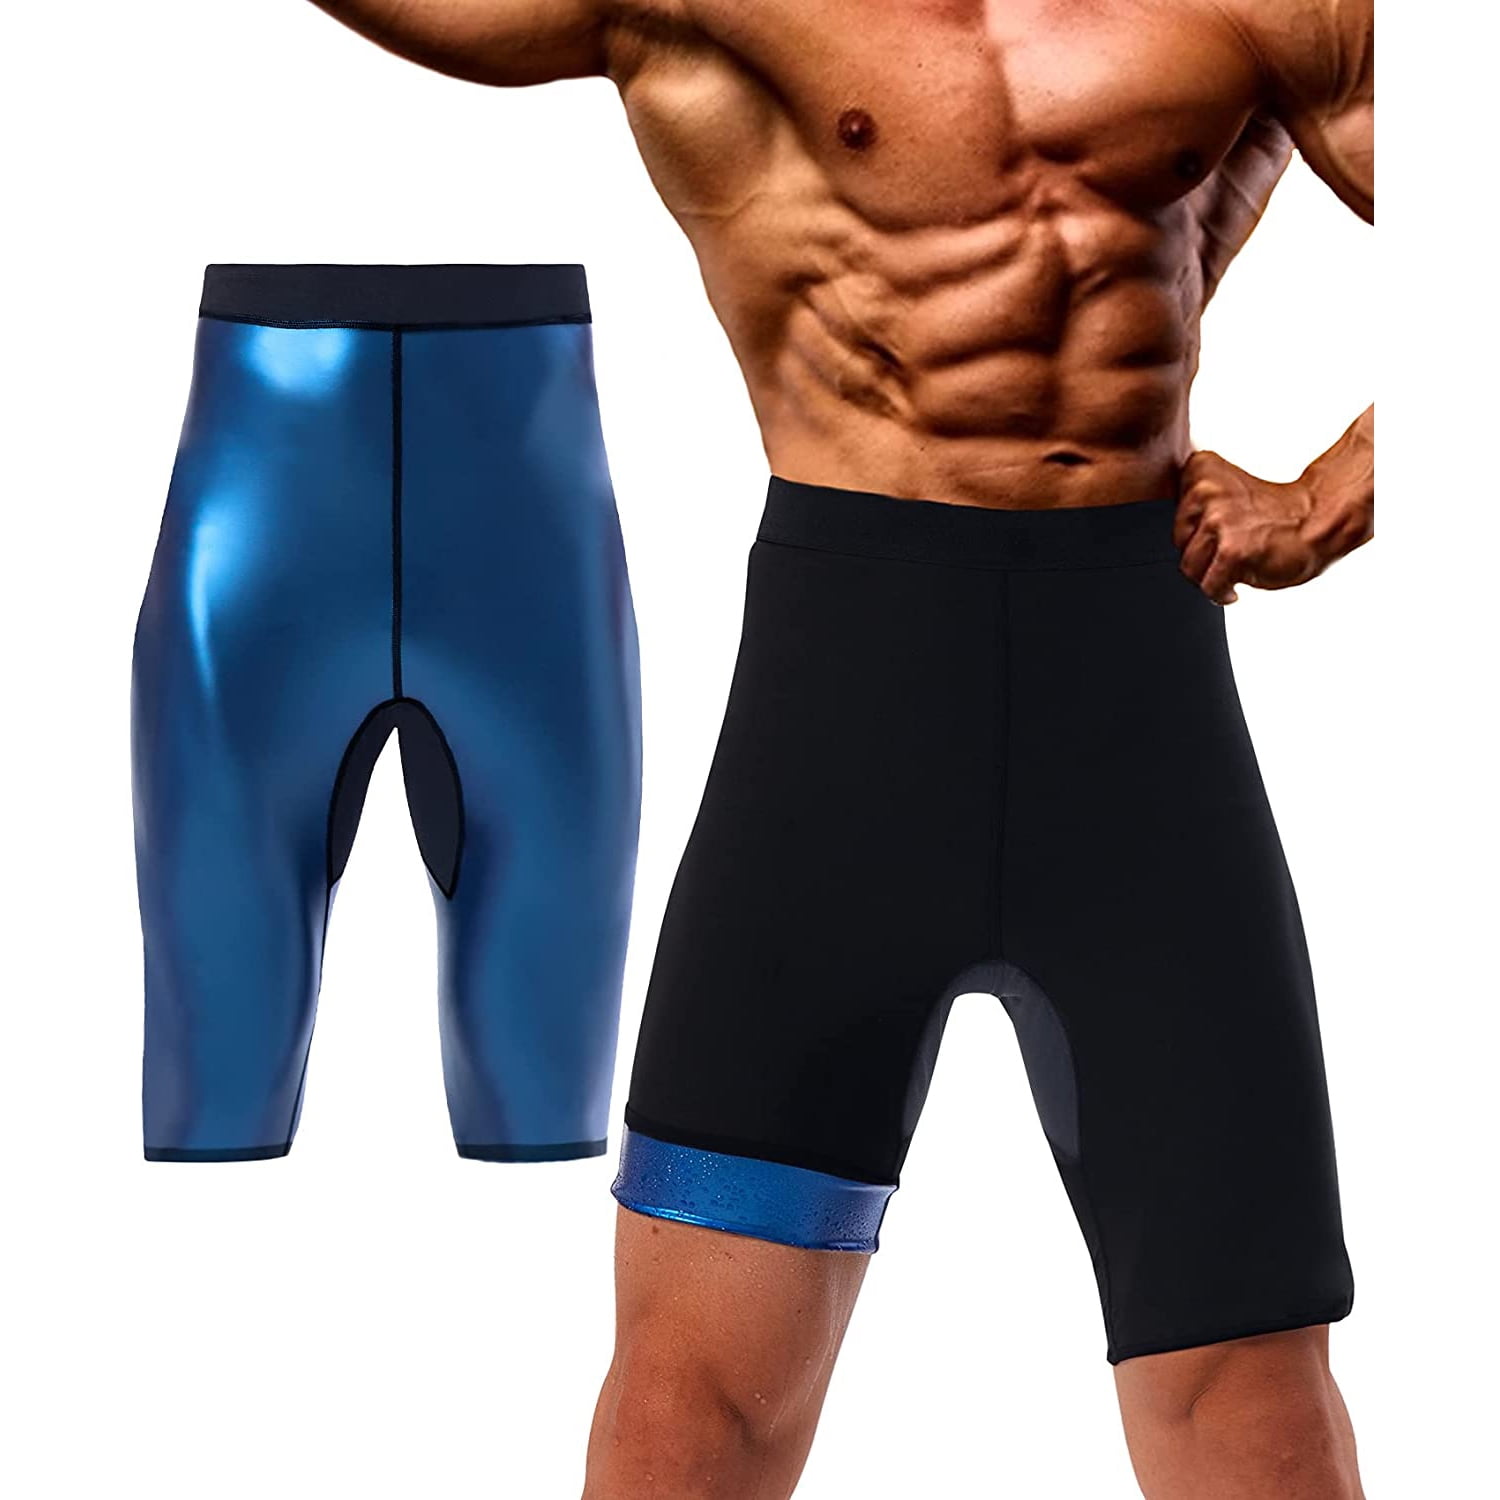 Mesh Crotch LMCOB Sauna Sweat Short Pants for Men Hot Thermo Leggings Sauna Tight Pants Polymer Pants Body Shaper Sauna Suit 